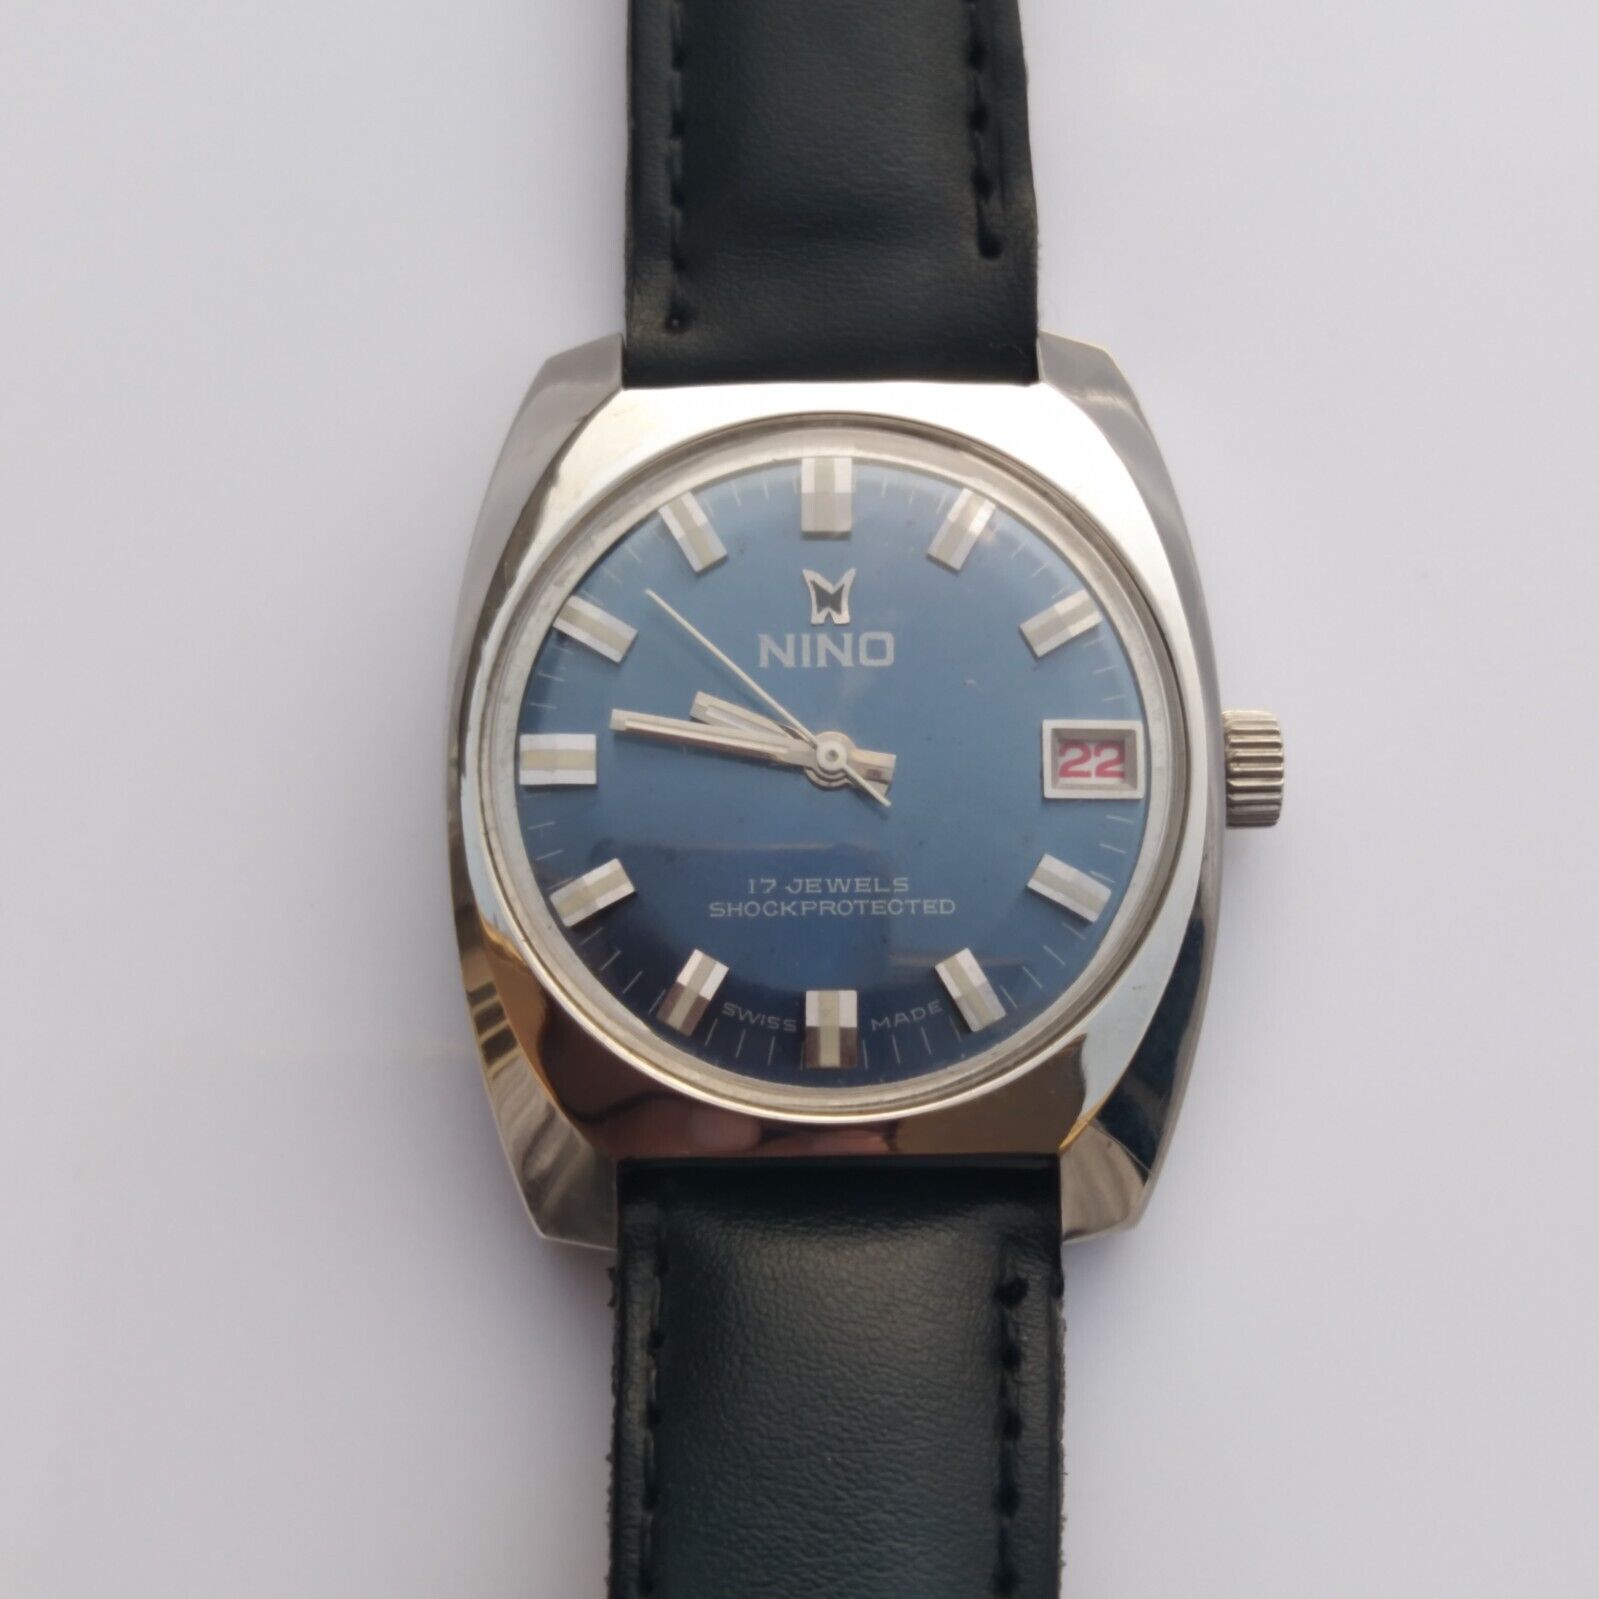 Nino Automatic Vintage Watch | The Revolver Watch Club | The Revolver Club